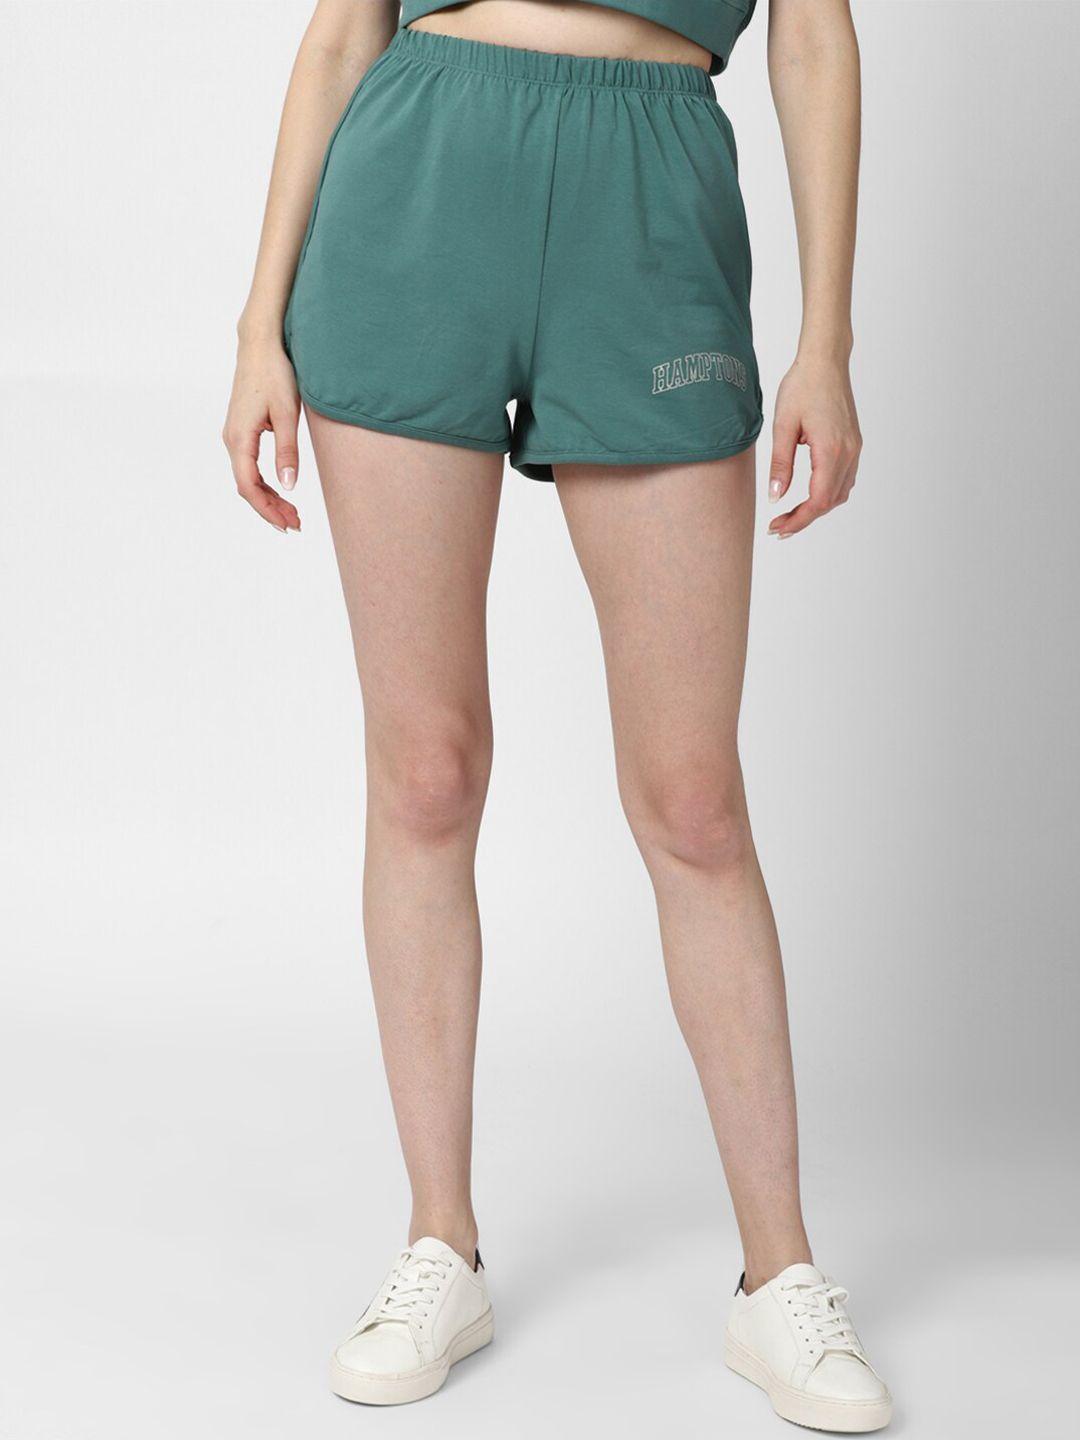 forever-21-women-green-sports-shorts